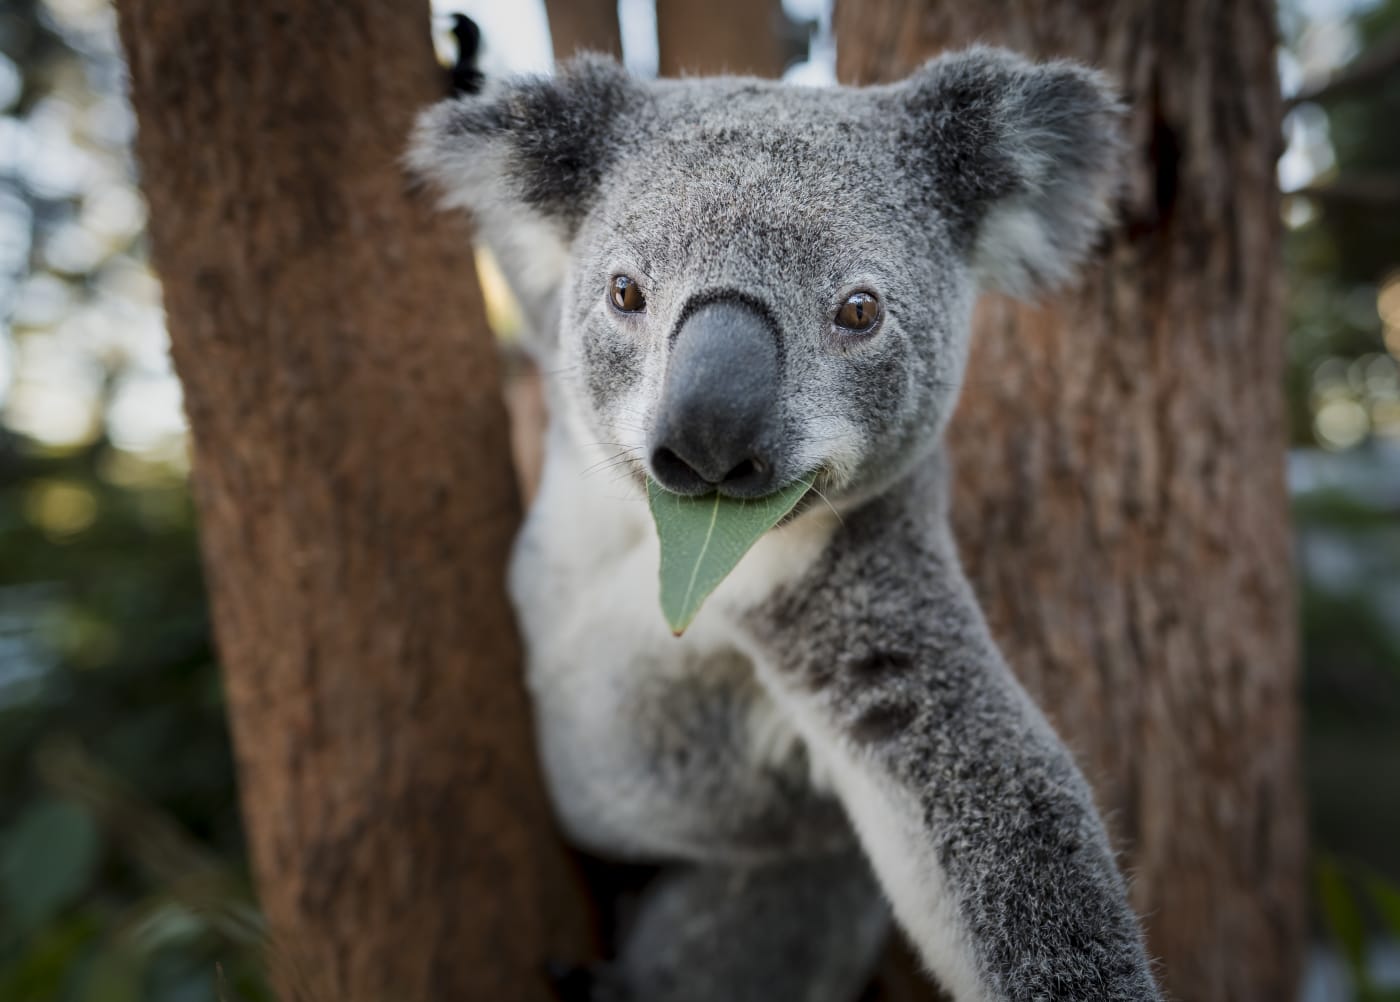 Koala eating a leaf in care, southeast Queensland, April 2017